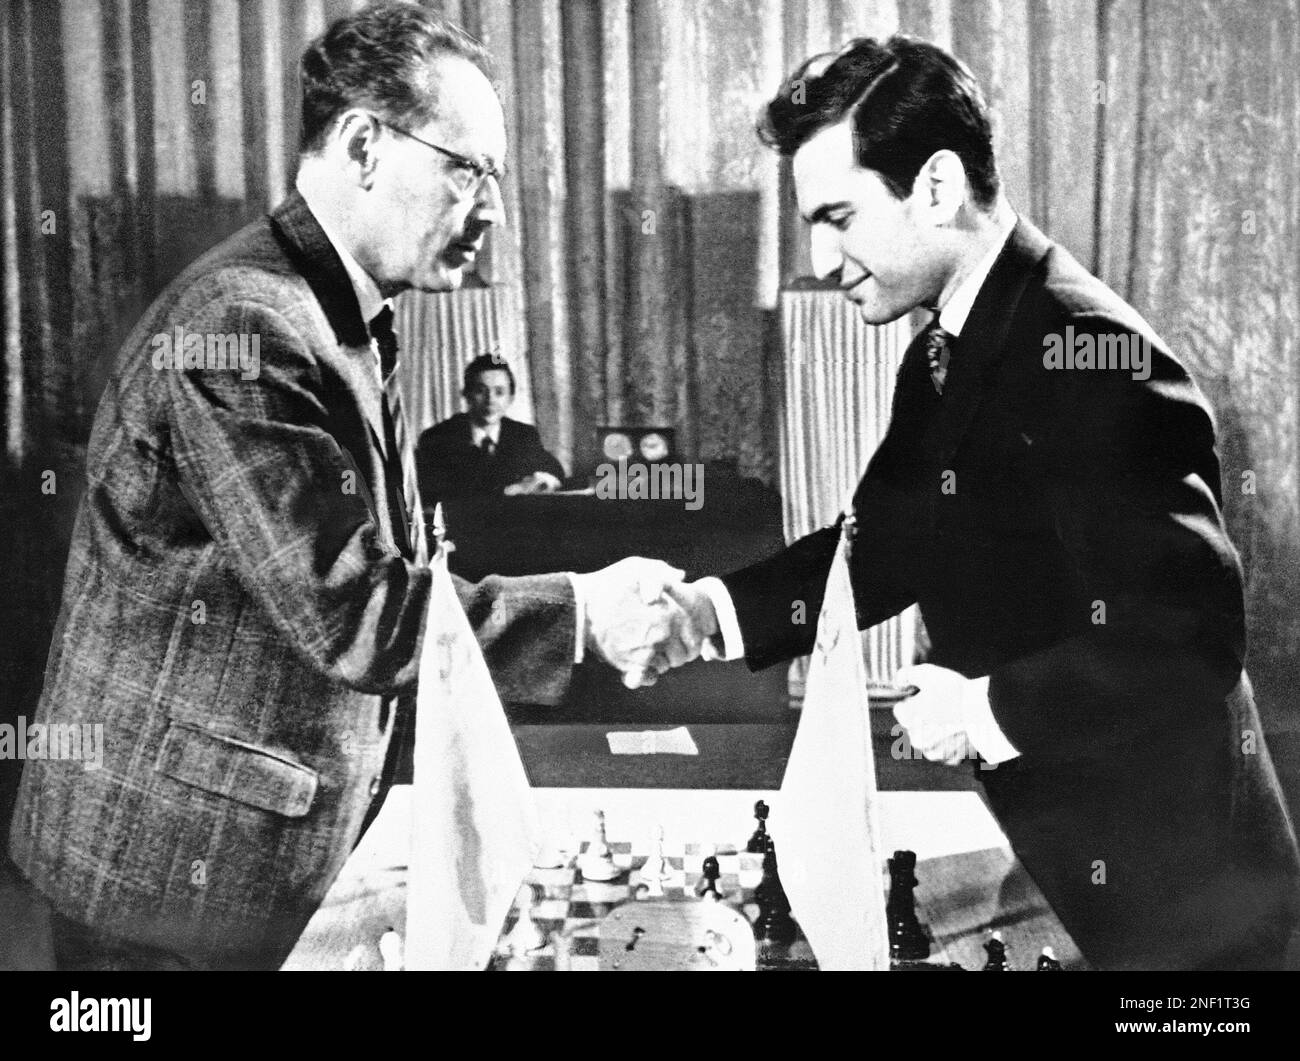 International Grandmaster and World Champion Mikhail Botvinnik in